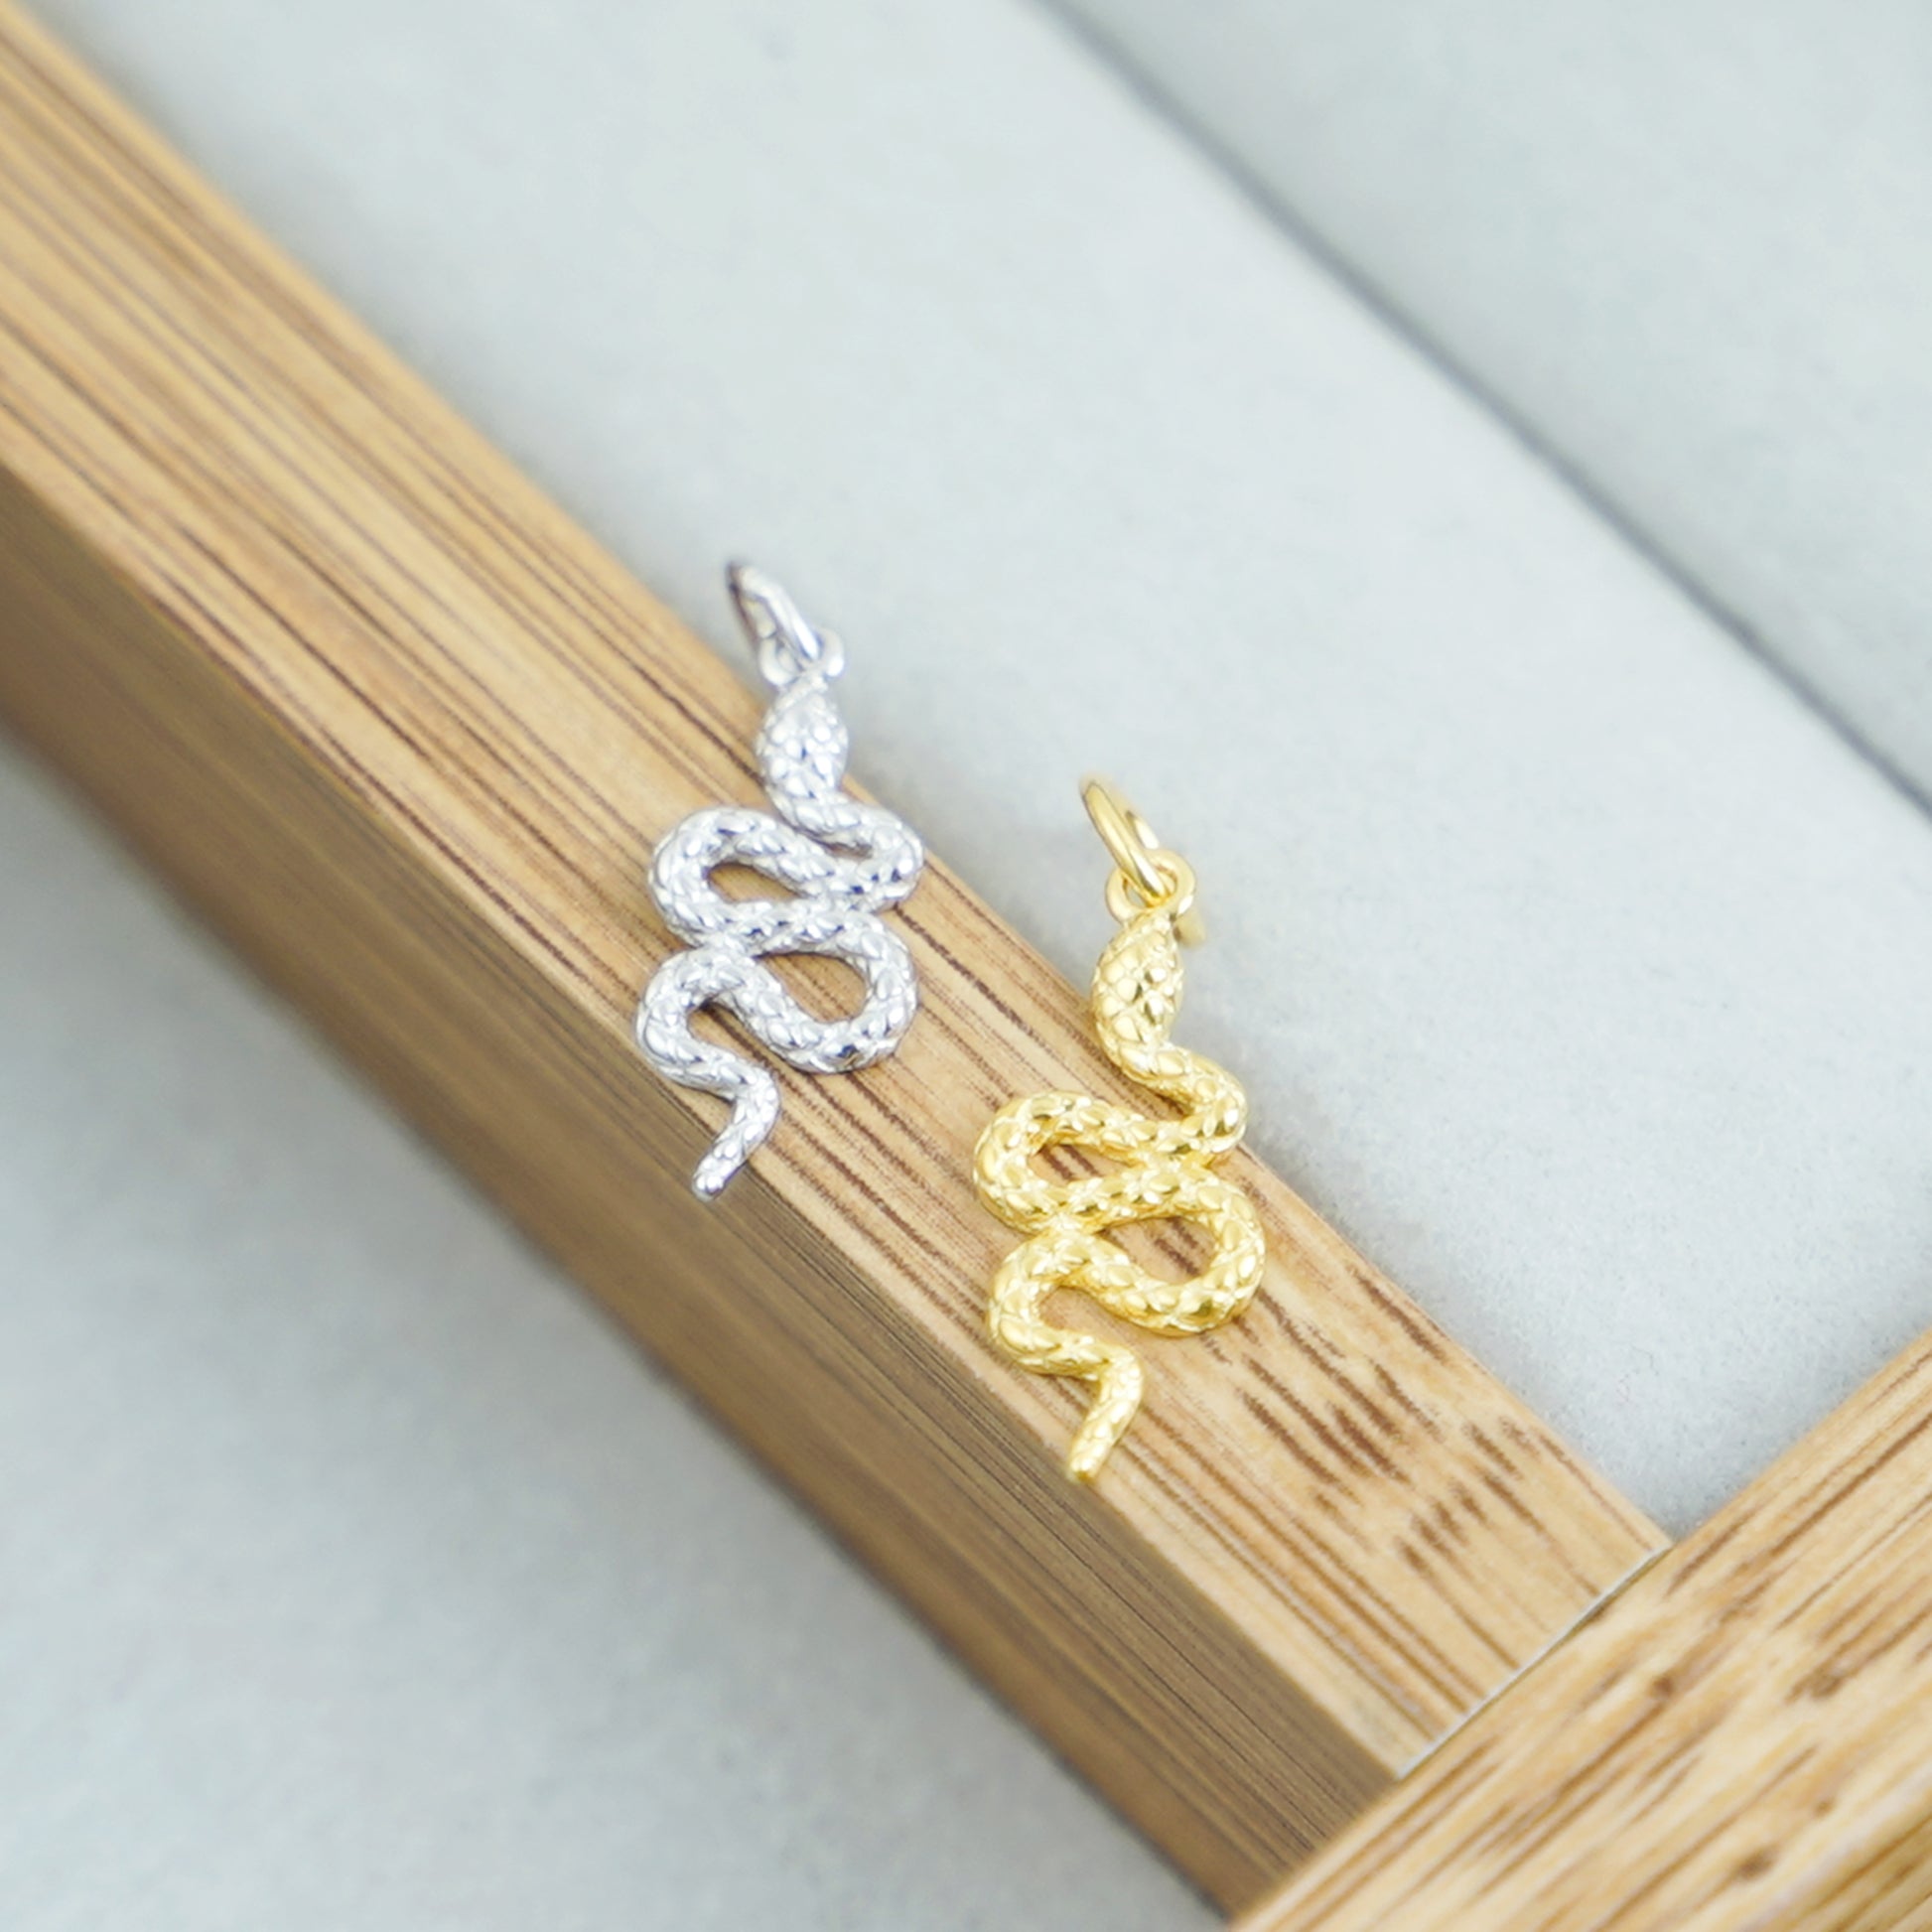 Sterling Silver Snake Charm Pendant For Earrings Necklace 2 Tones - sugarkittenlondon